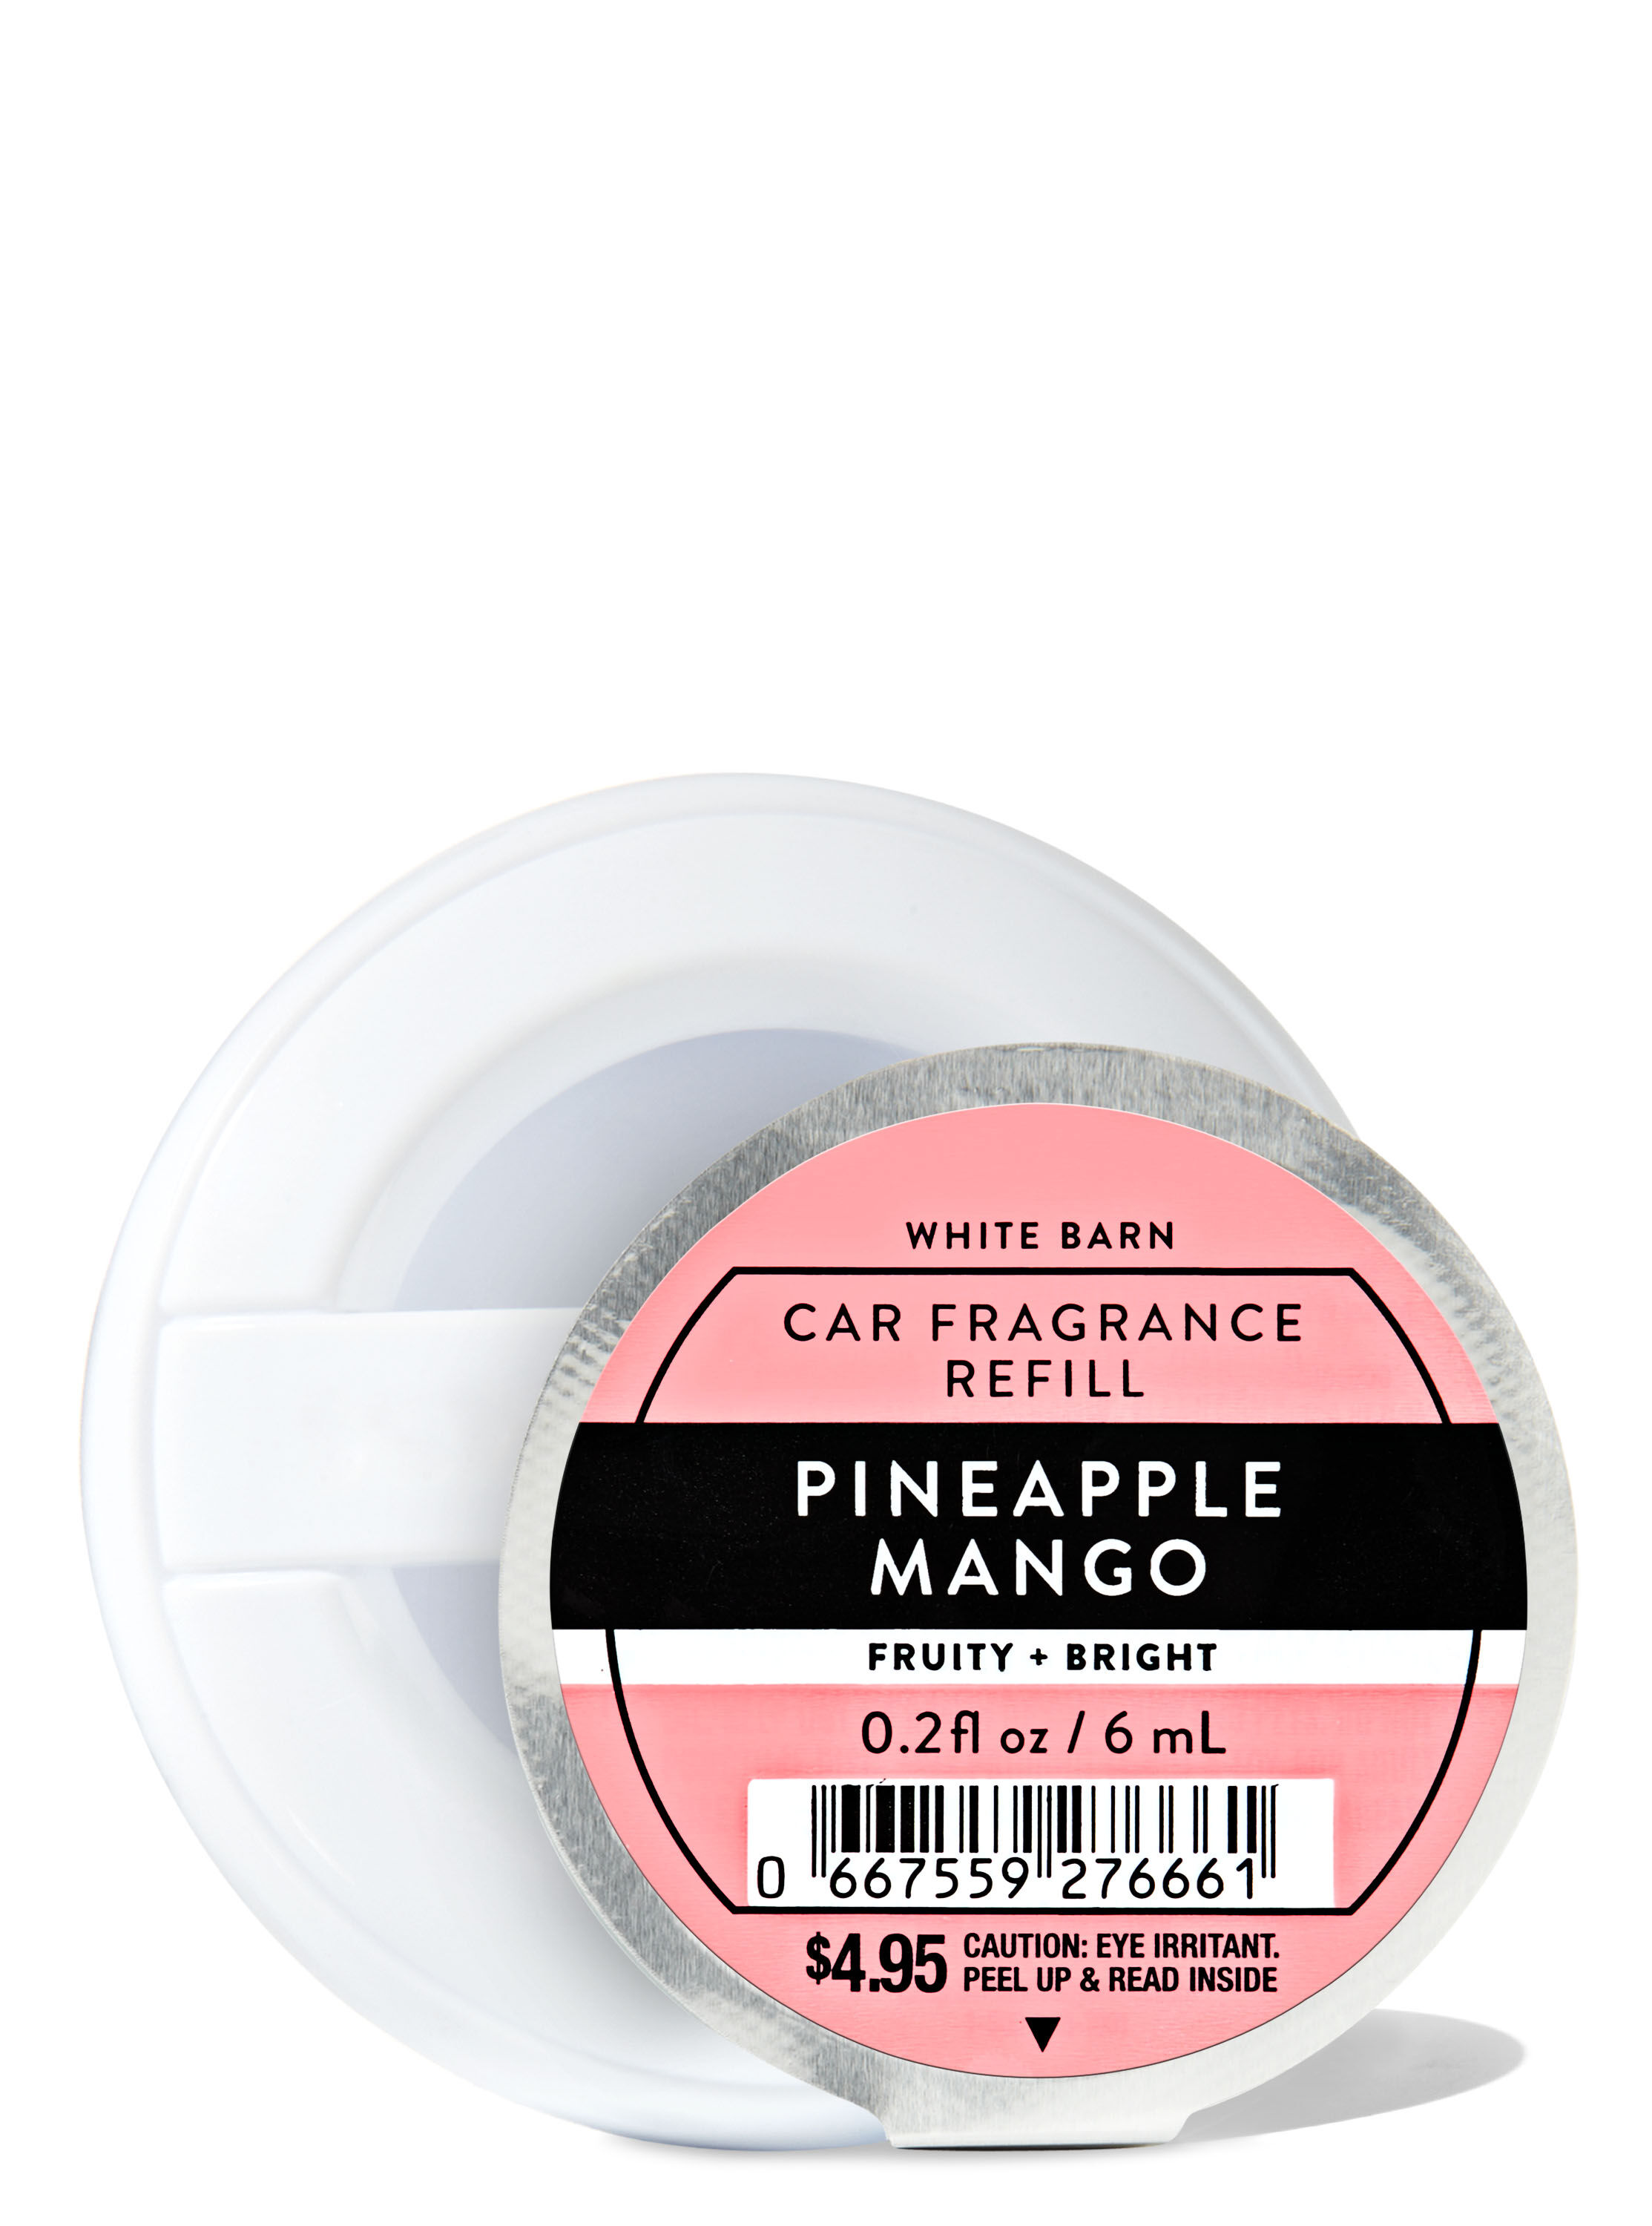 Pineapple Mango Car Fragrance Refill